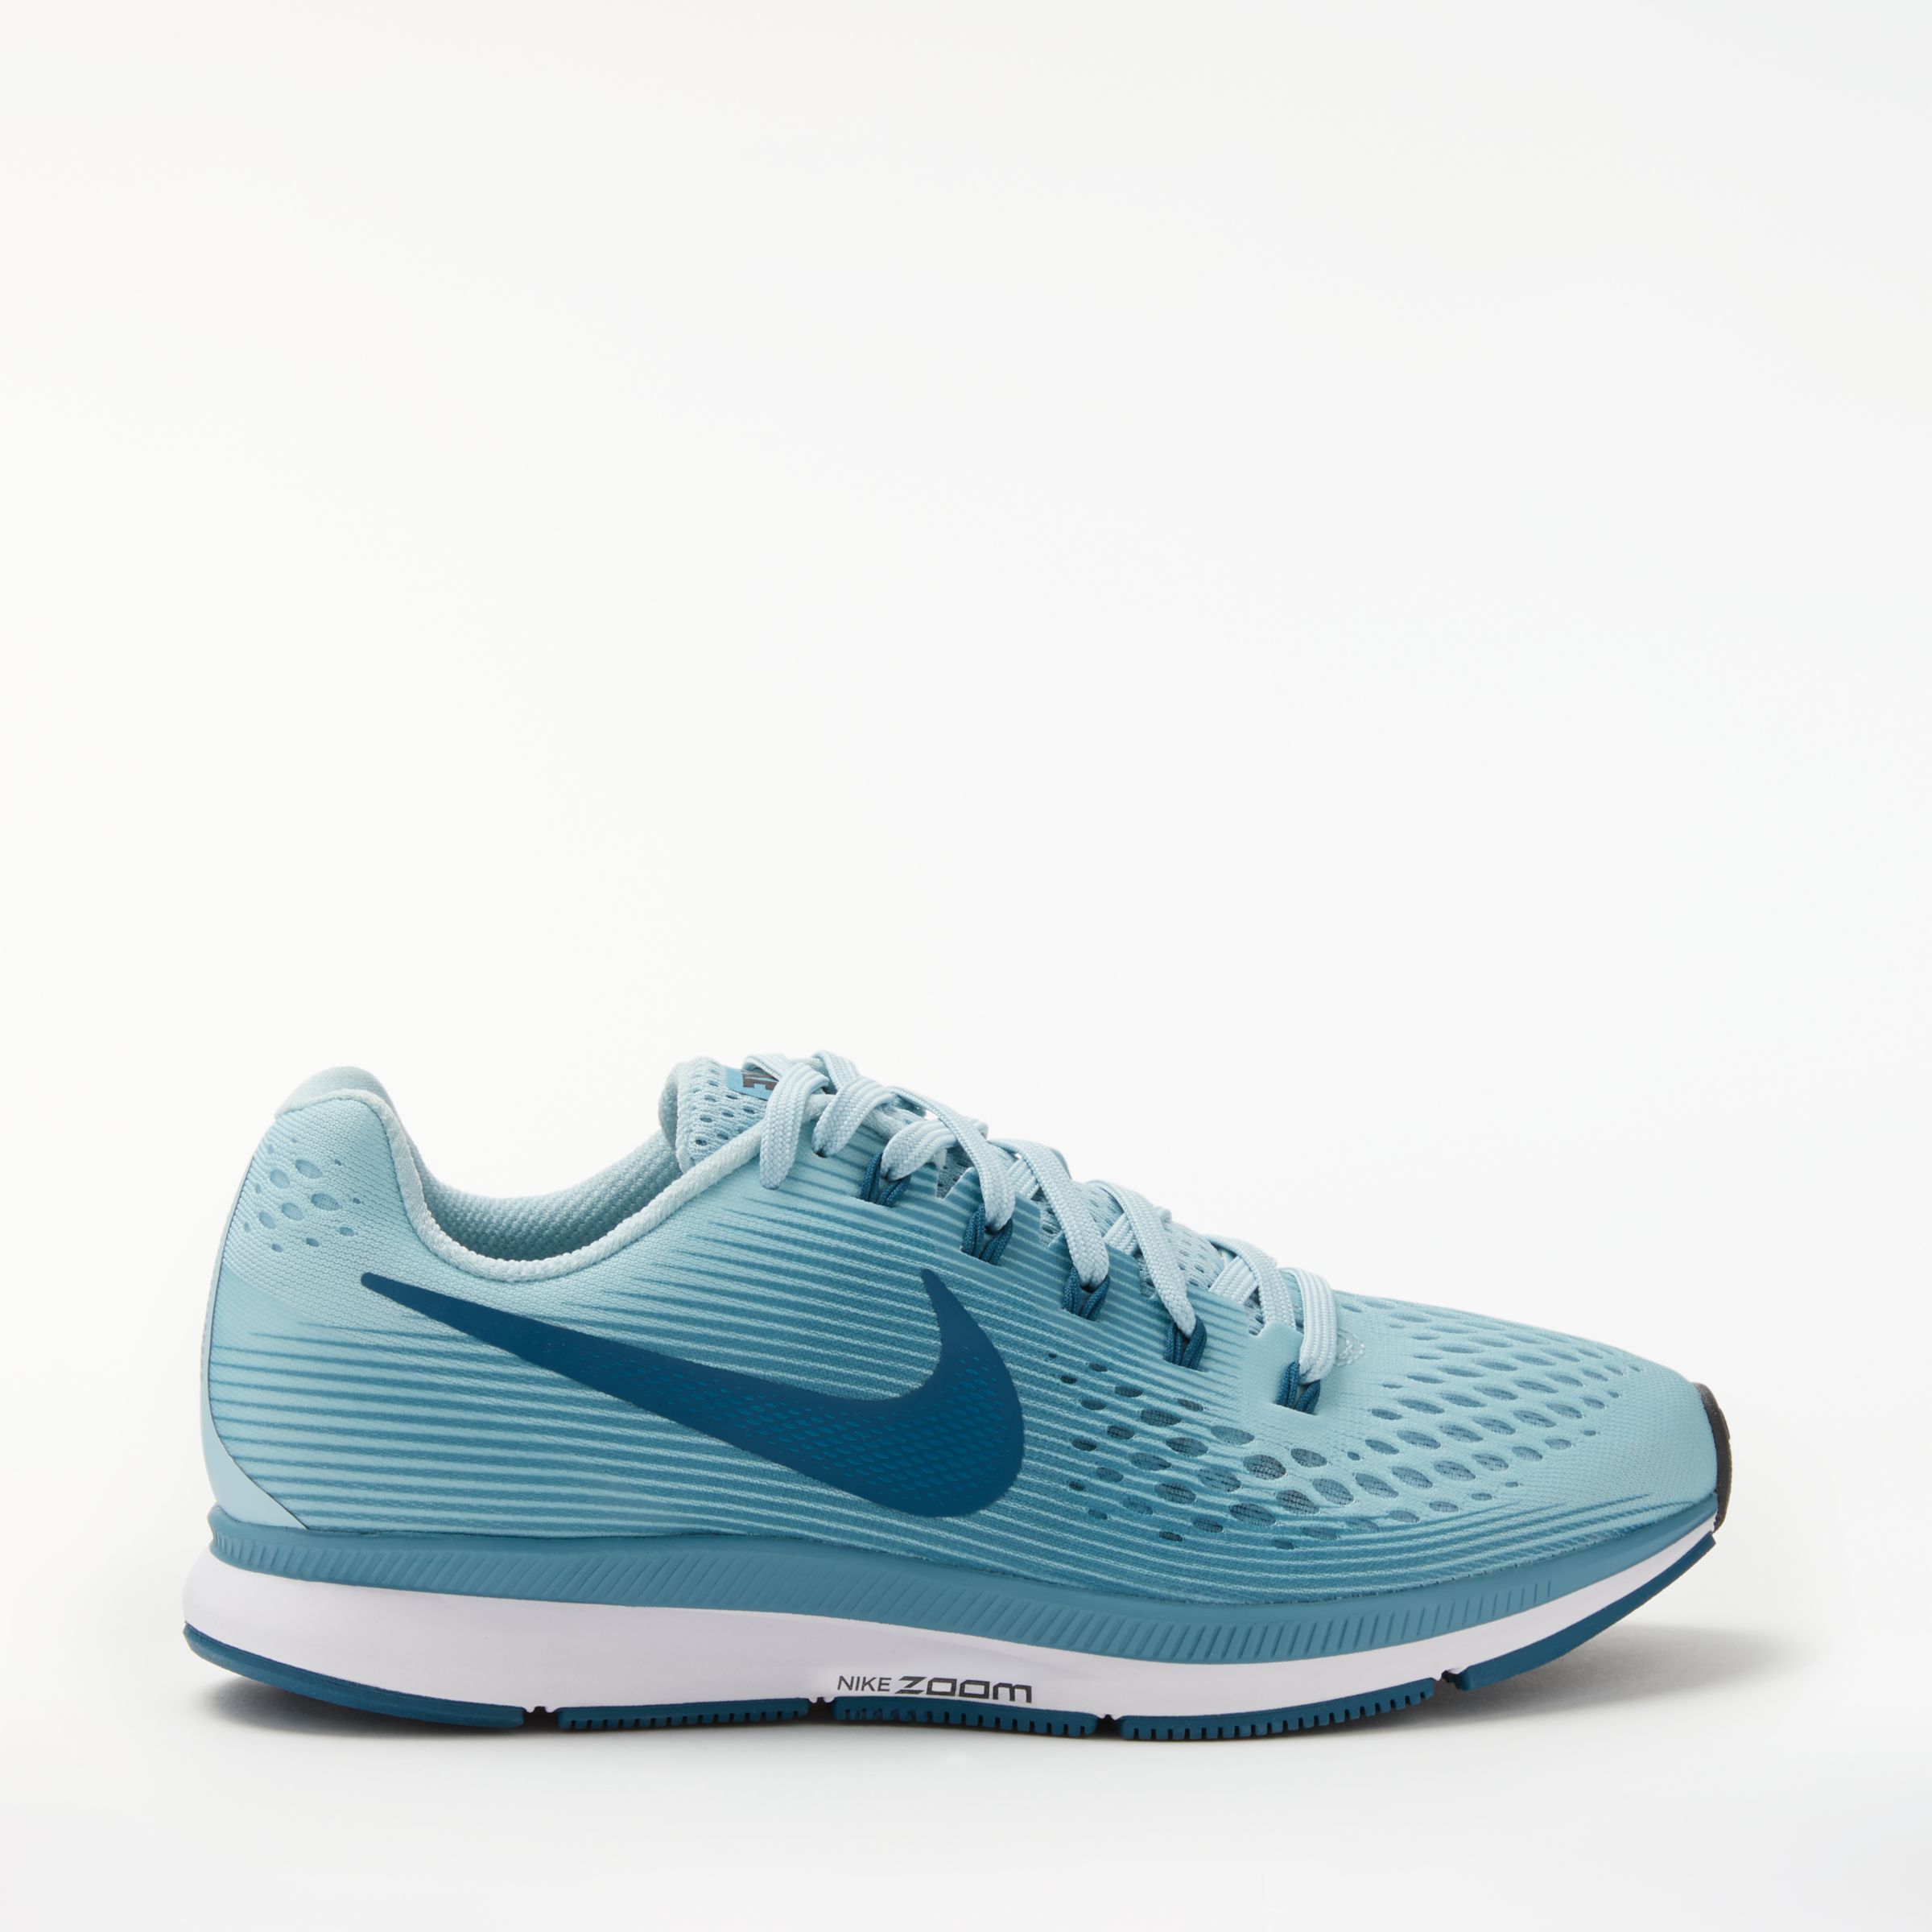 Nike Air Zoom Pegasus Running Shoes,